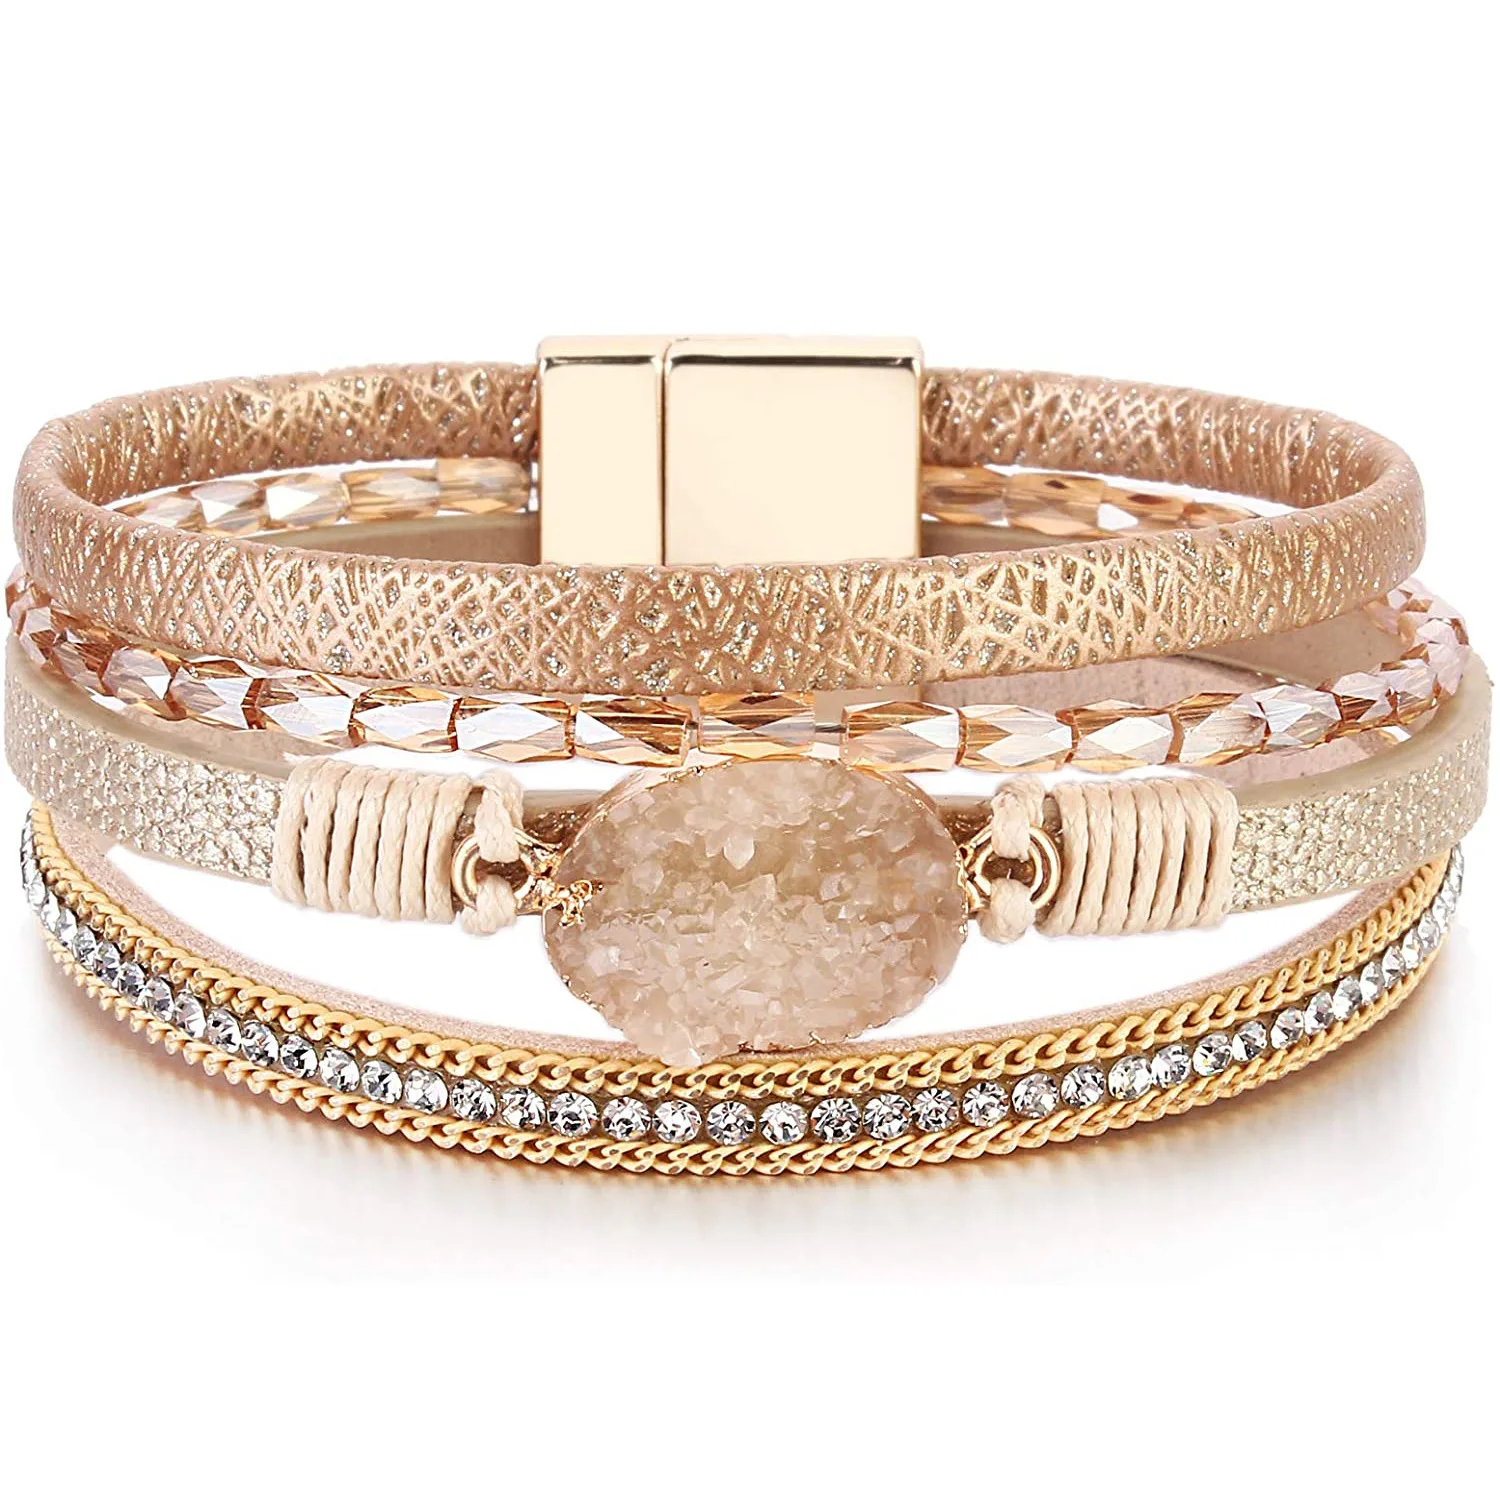 

Leather Wrap Bracelet Boho Cuff Bracelets Crystal Bead Bracelet with Clasp Jewelry Gifts for Women Teen Girls